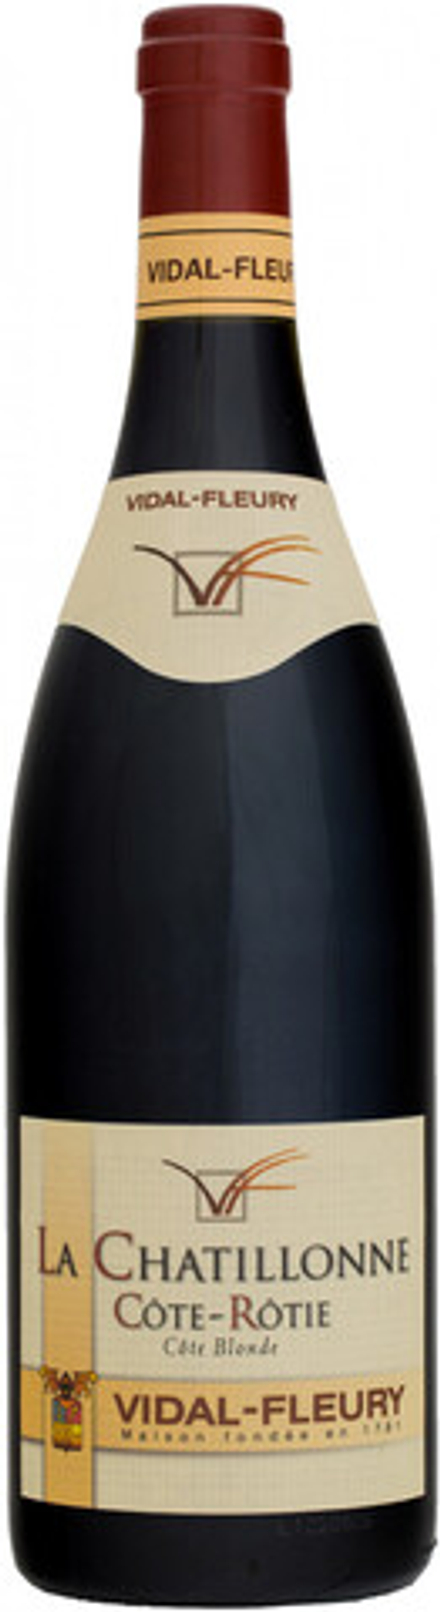 Вино Vidal-Fleury Cote-Rotie La Chatillonne AOC, 0,75 л.